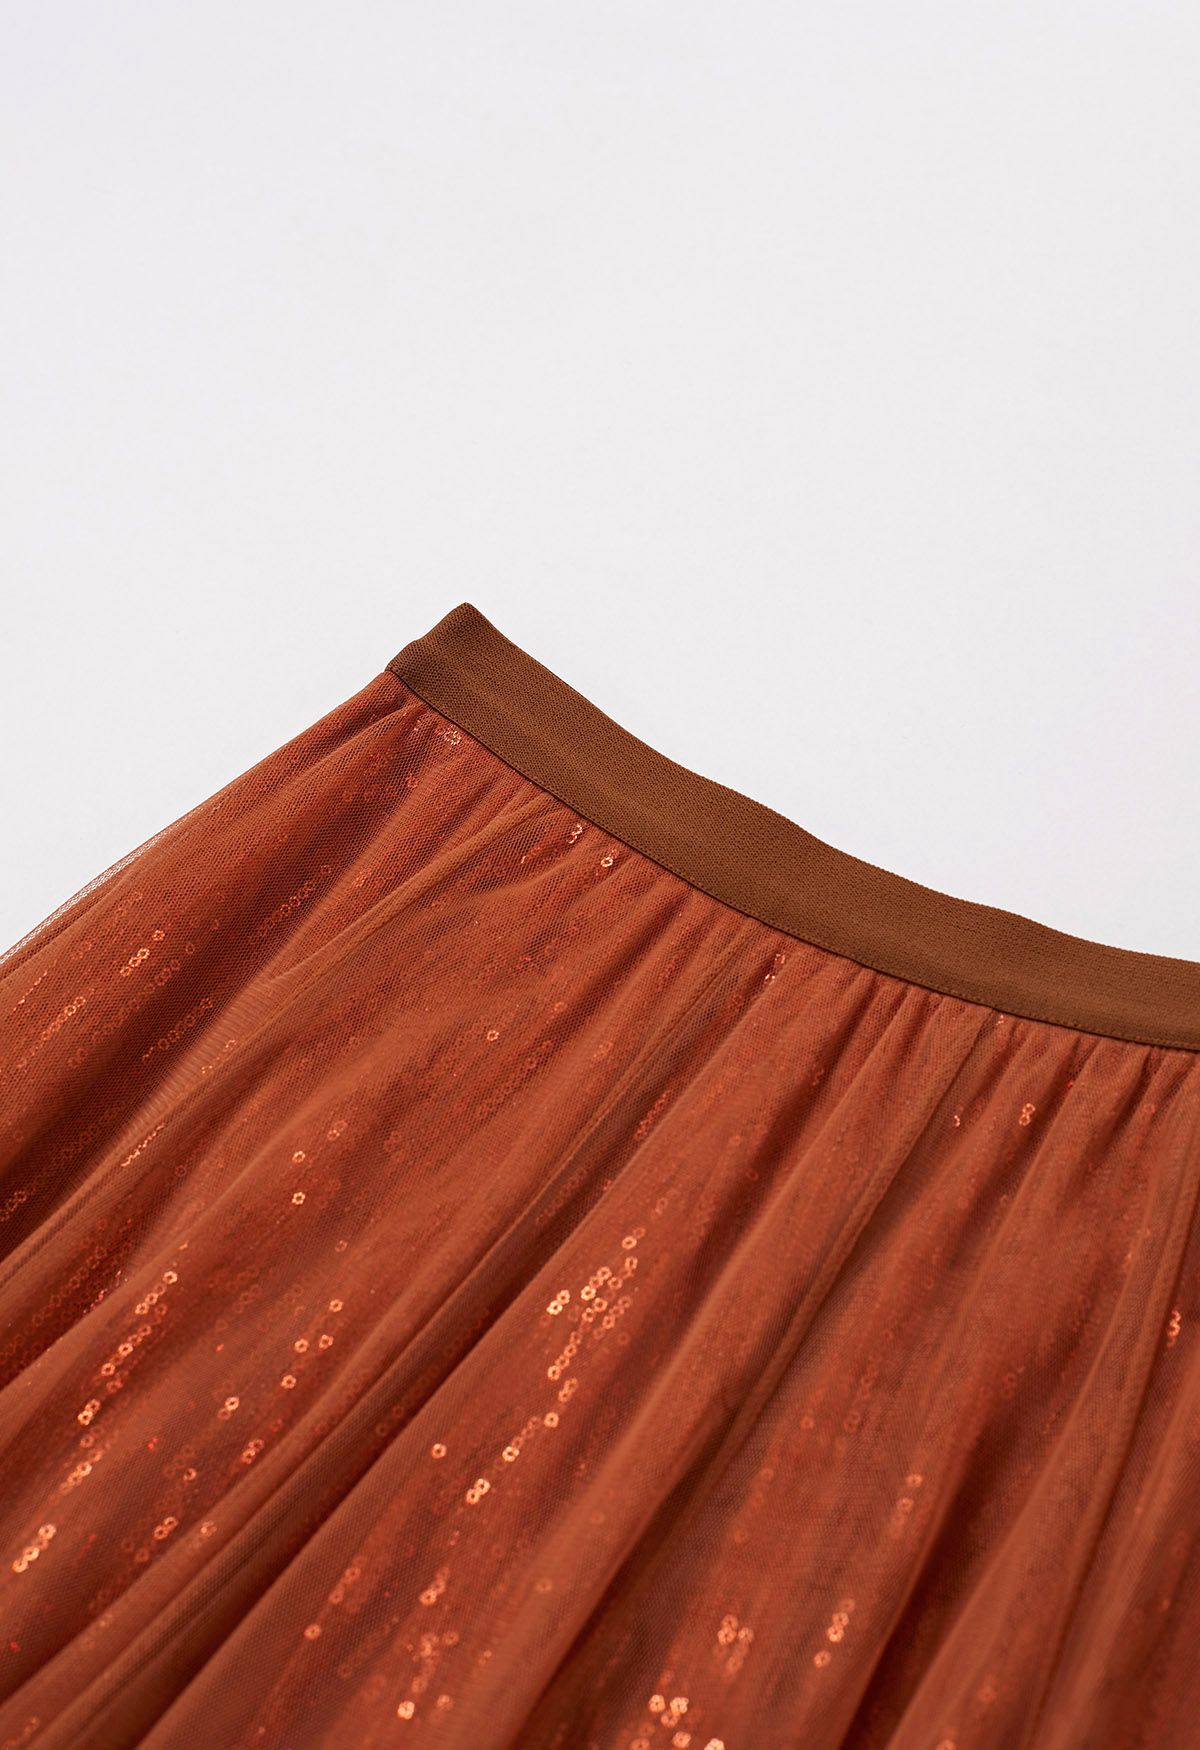 Ravishing Sequins Mesh Tulle Midi Skirt in Pumpkin